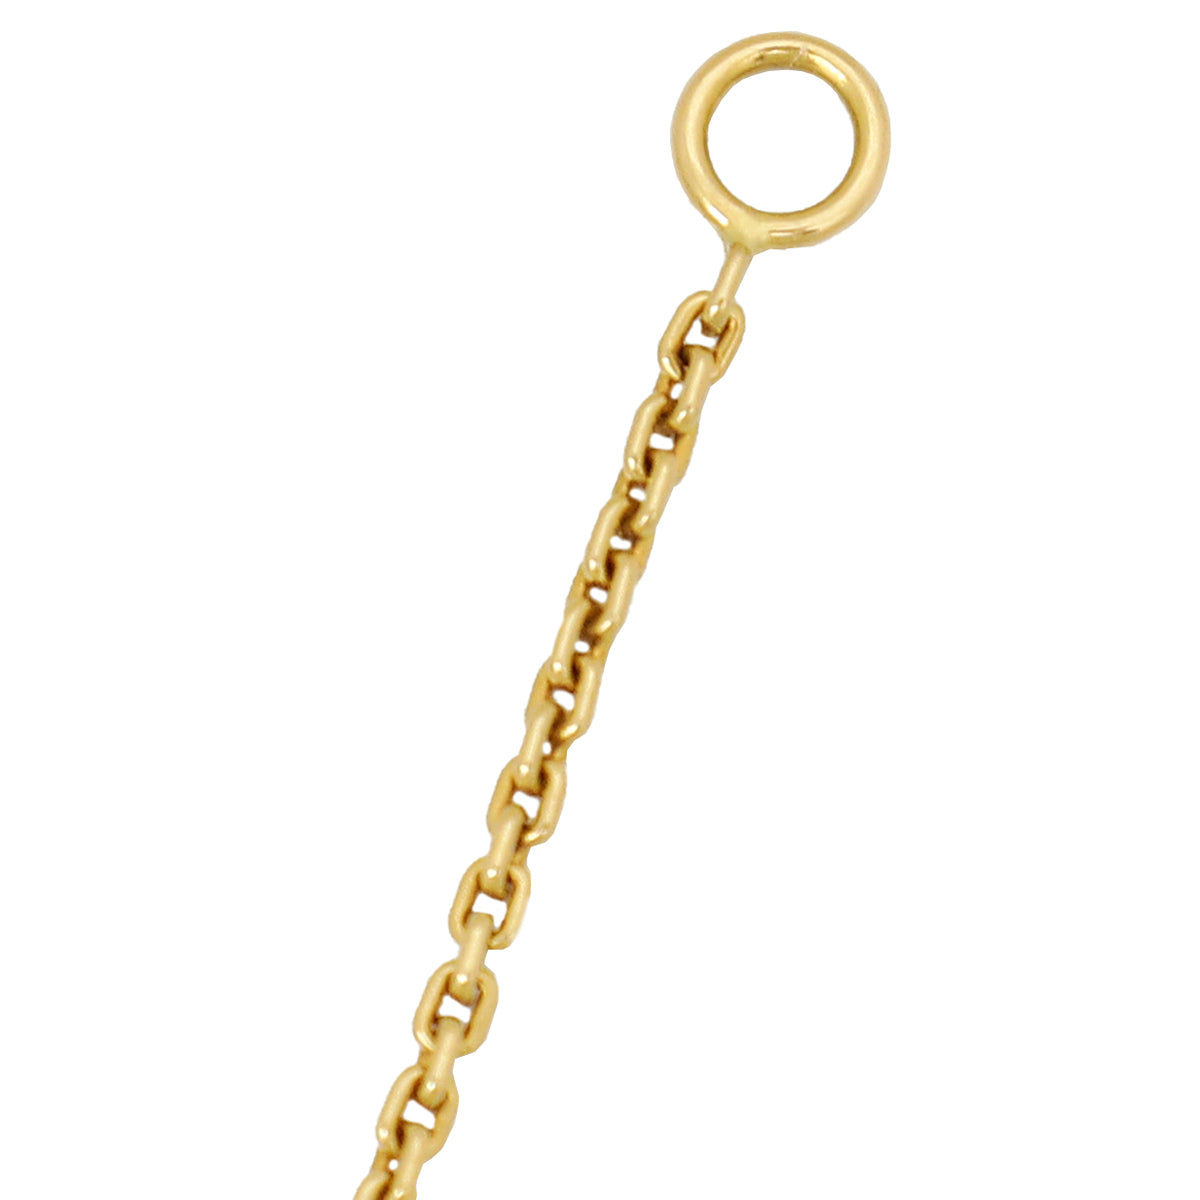 Louis Vuitton 18K Yellow Gold Diamond Volt One Small Pendant Necklace